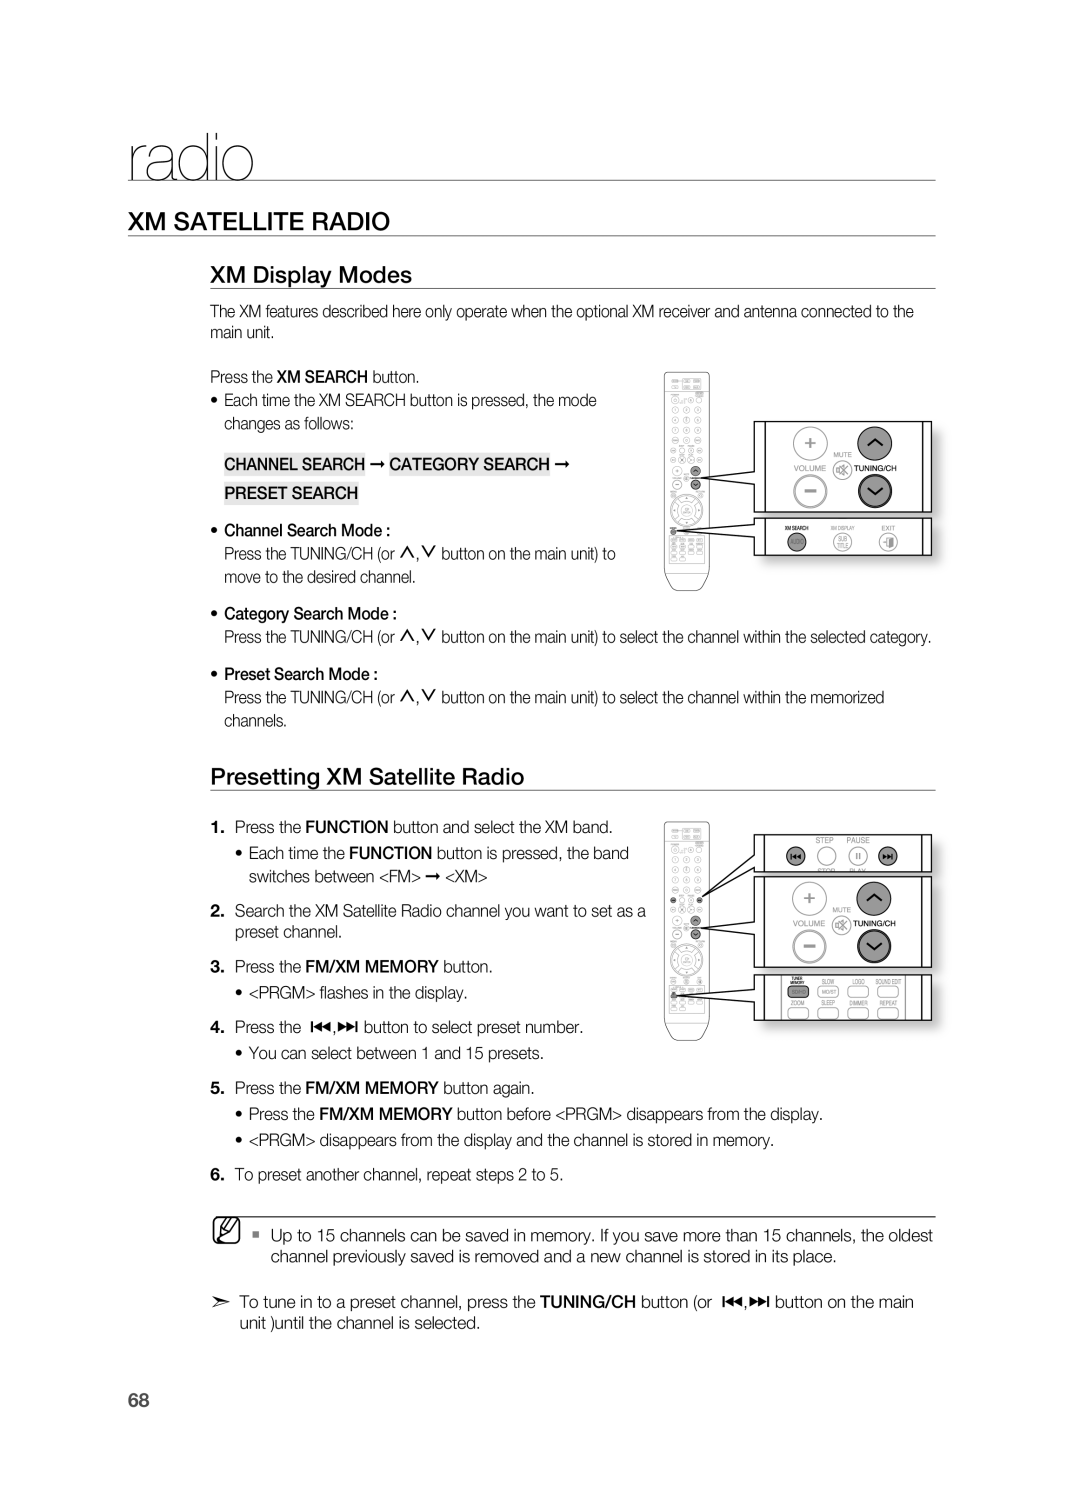 Samsung HT-TZ515 user manual XM SATELLITE rADIO, XM Display Modes, Presetting XM Satellite radio 